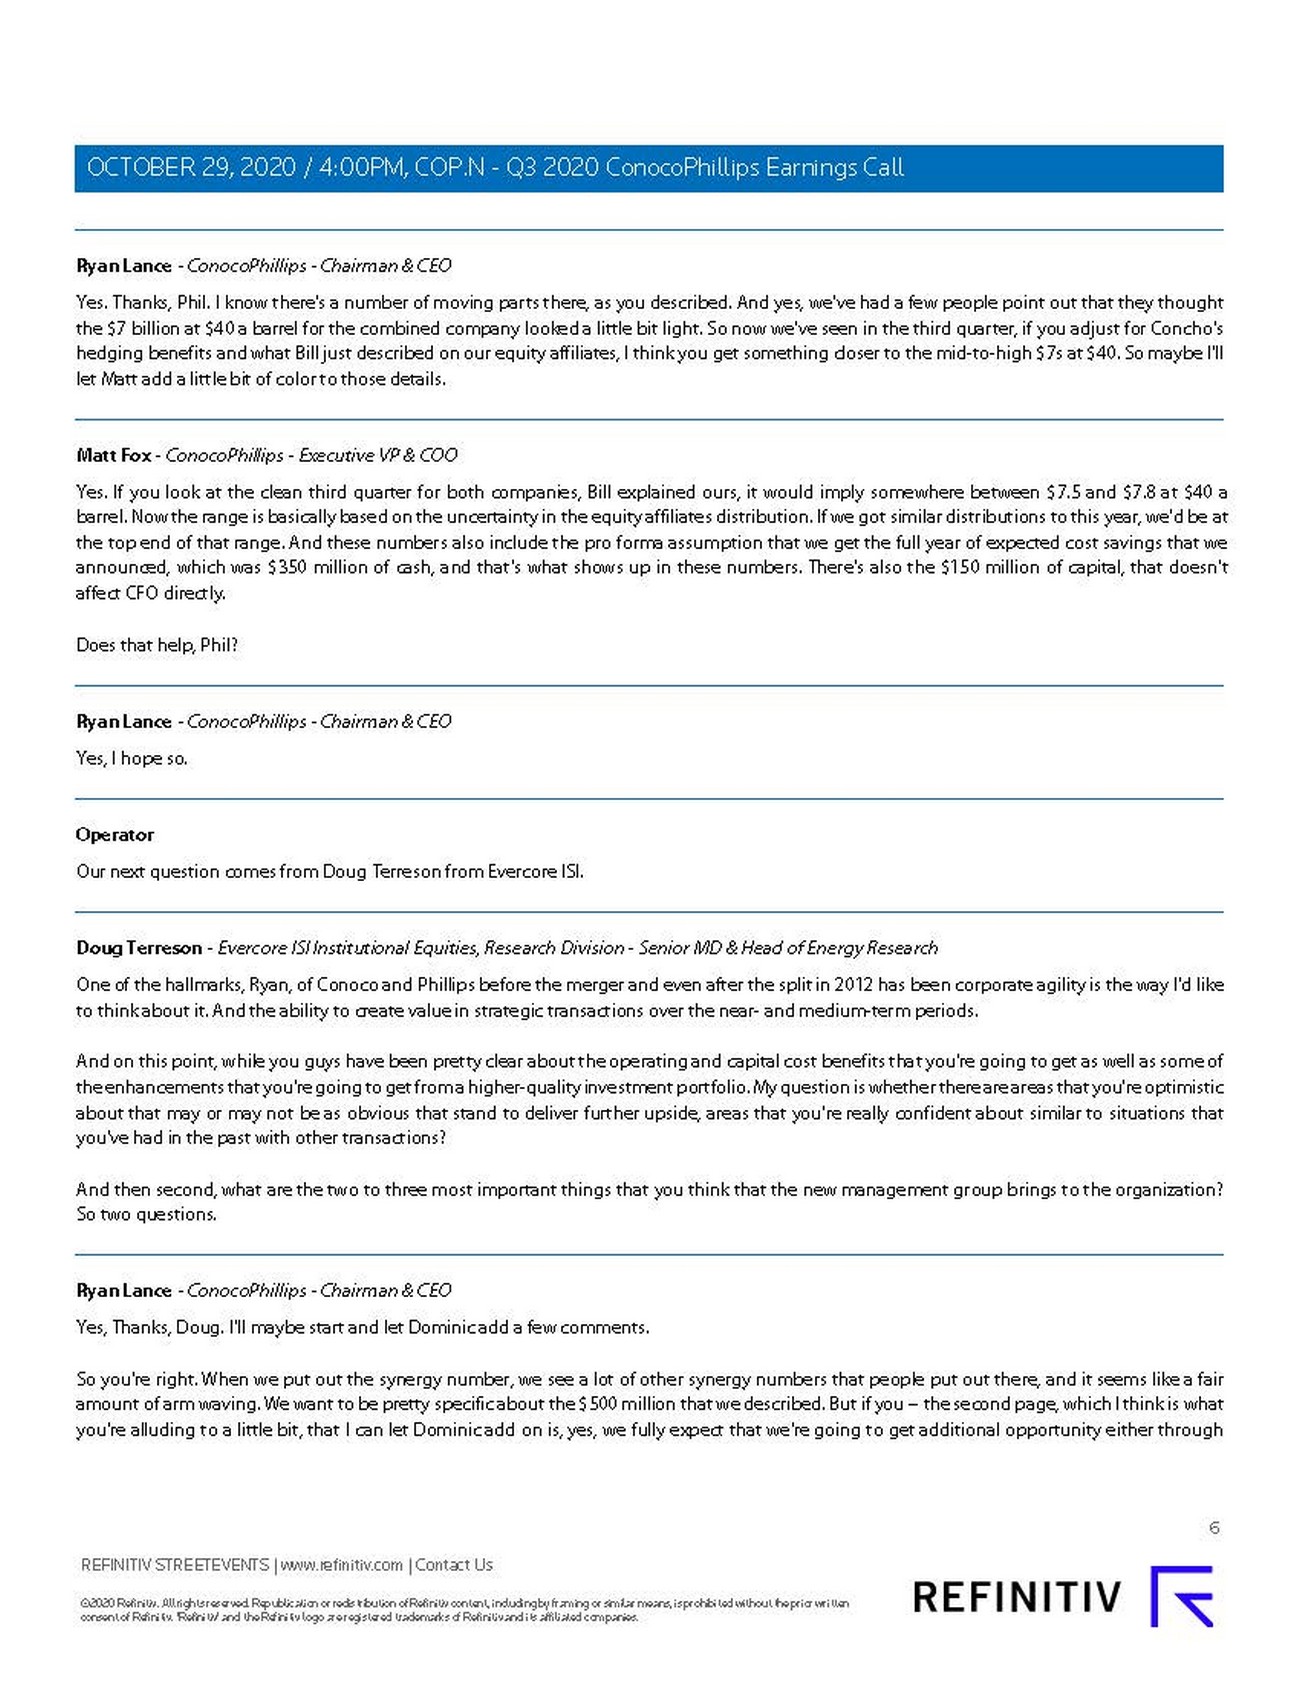 New Microsoft Word Document (2)_cop-usq_transcript_2020-10-29_page_06.jpg